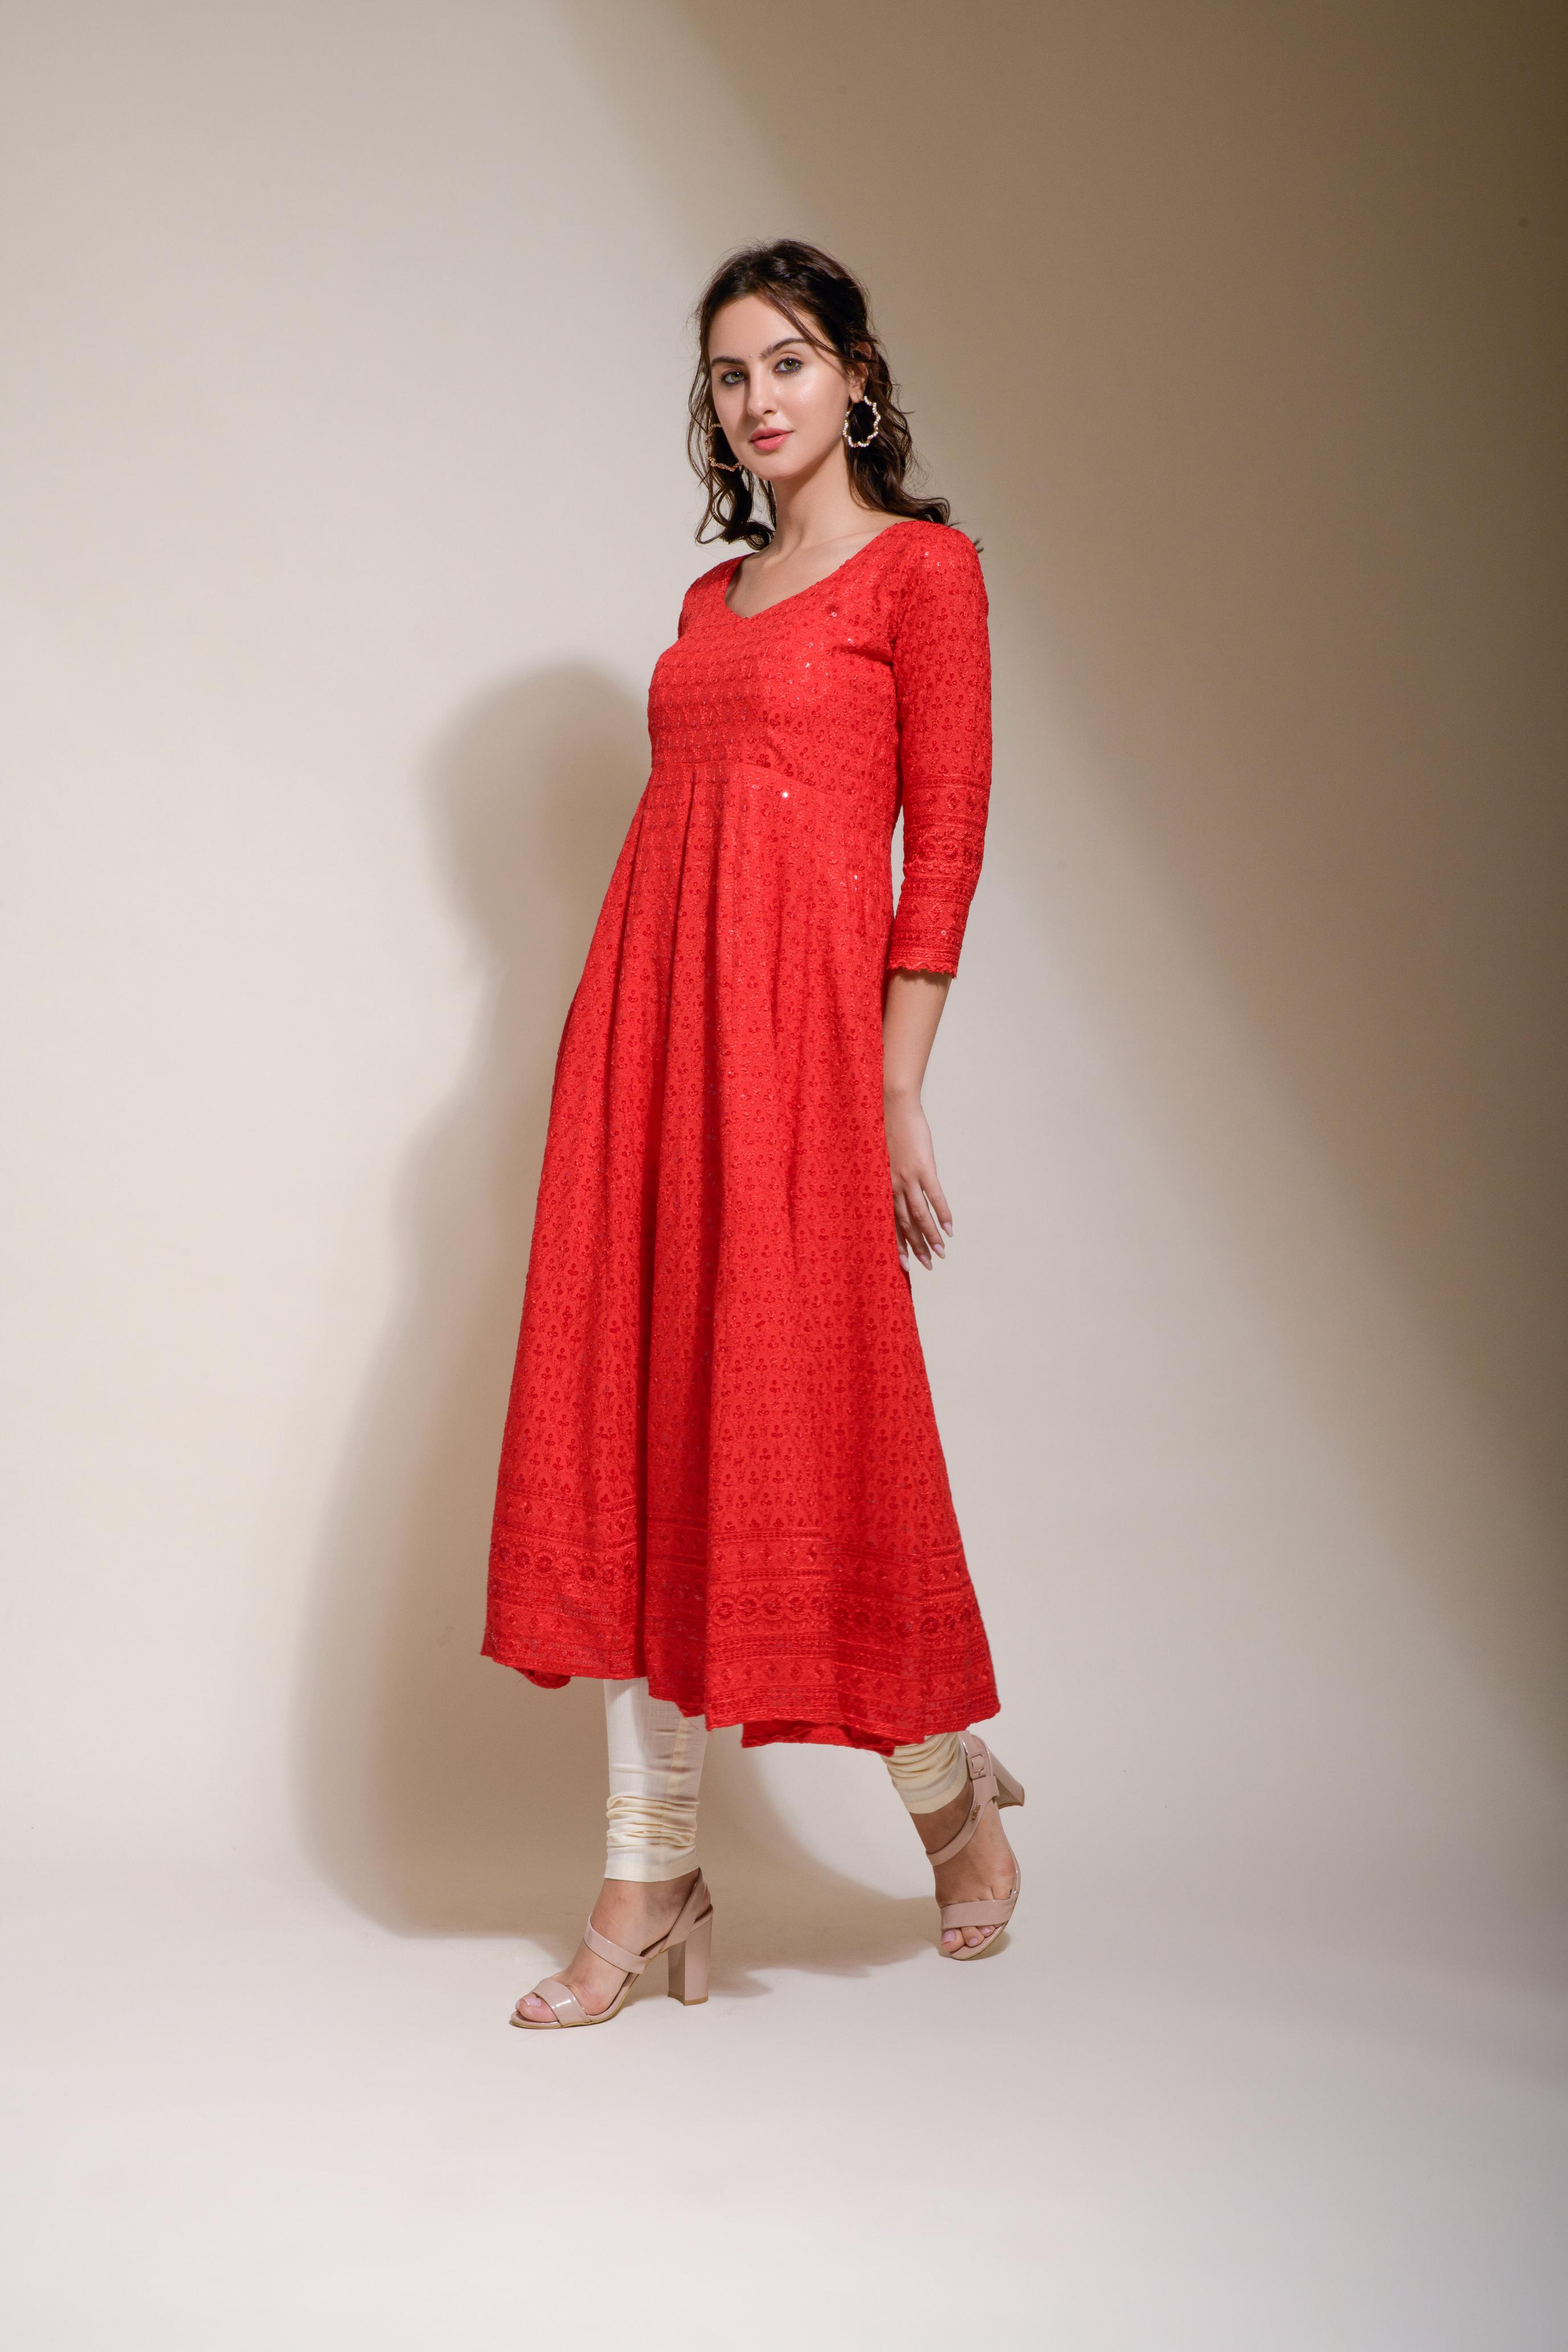 Kayra Red chikankari style kurta pant set